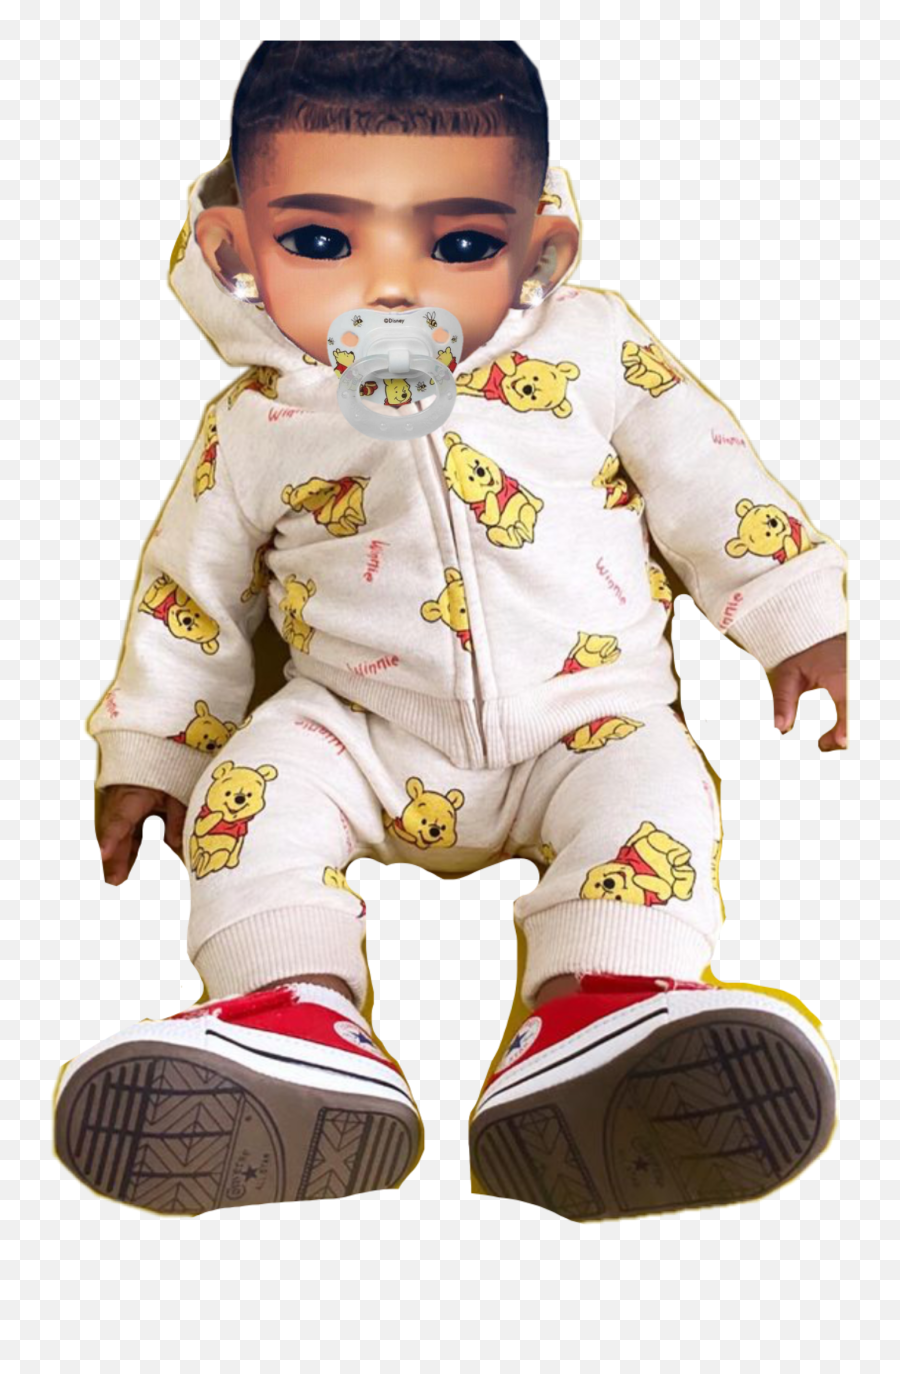 The Most Edited Newborn Baby Picsart - Boy Emoji,Babies That Look Like Emojis Videos